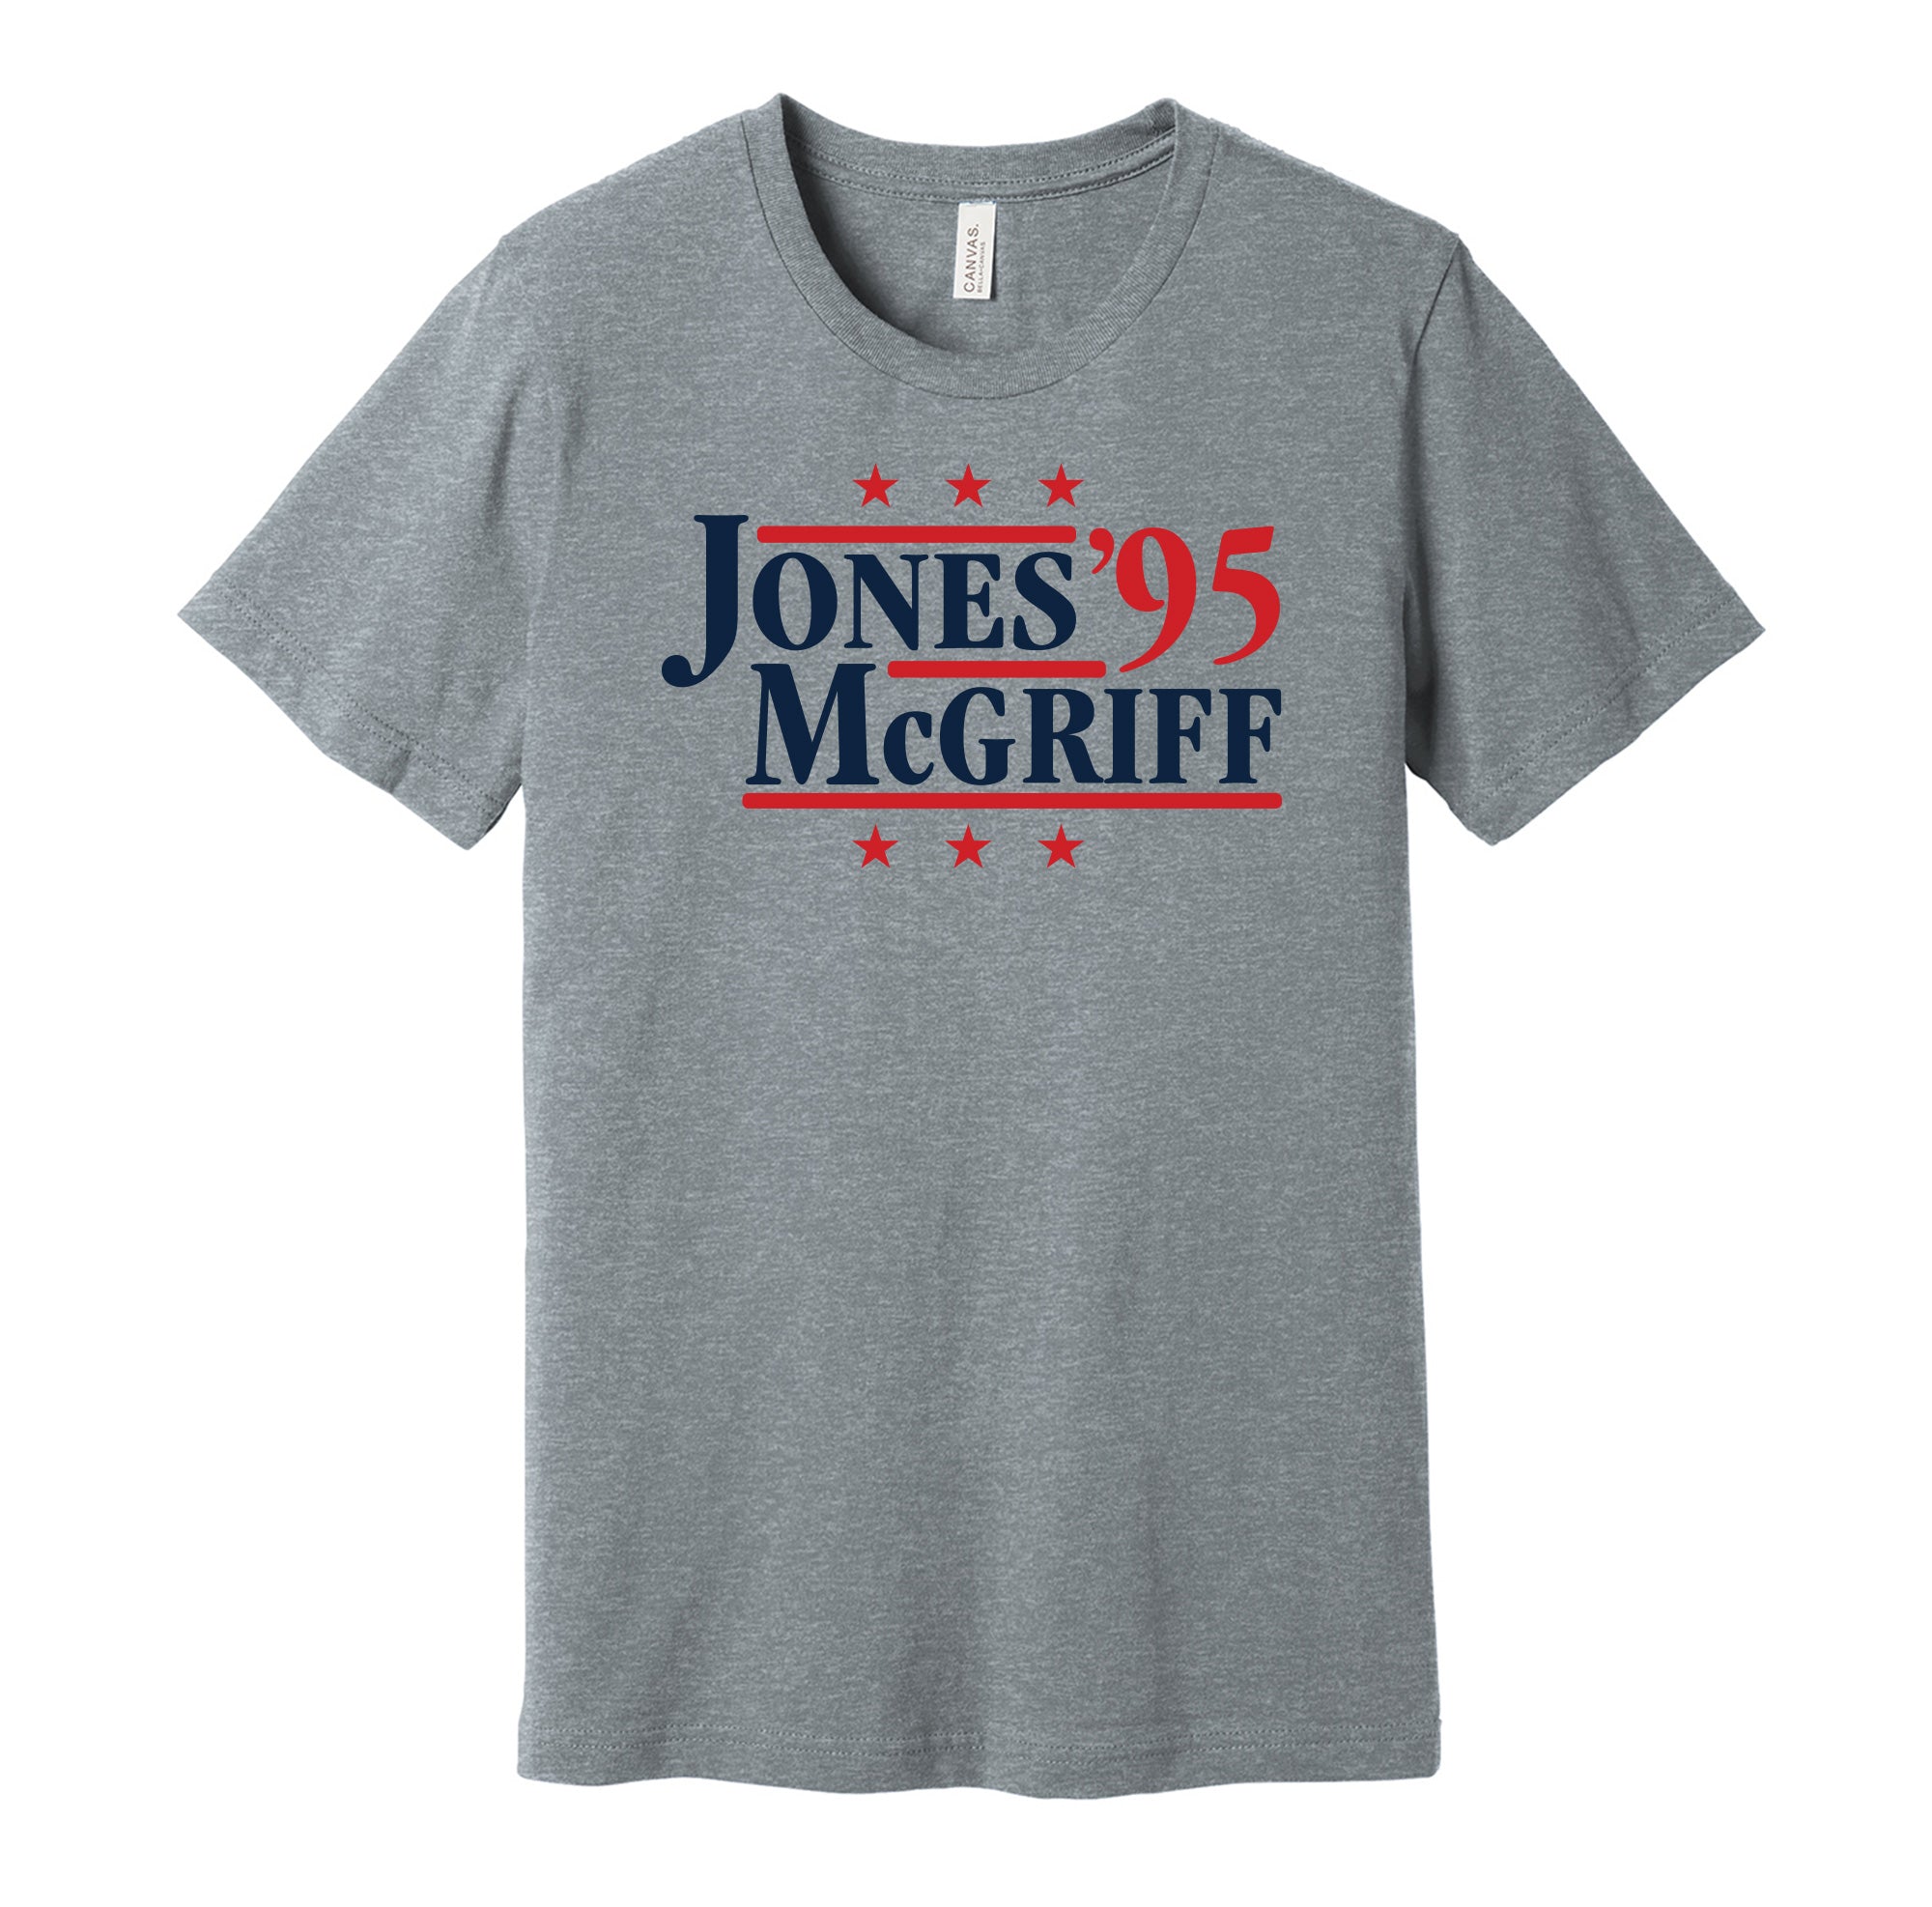 Jones & McGriff '95 - Atlanta Baseball Legends Political Campaign Parody T-Shirt - Hyper Than Hype Shirts XS / Grey Shirt